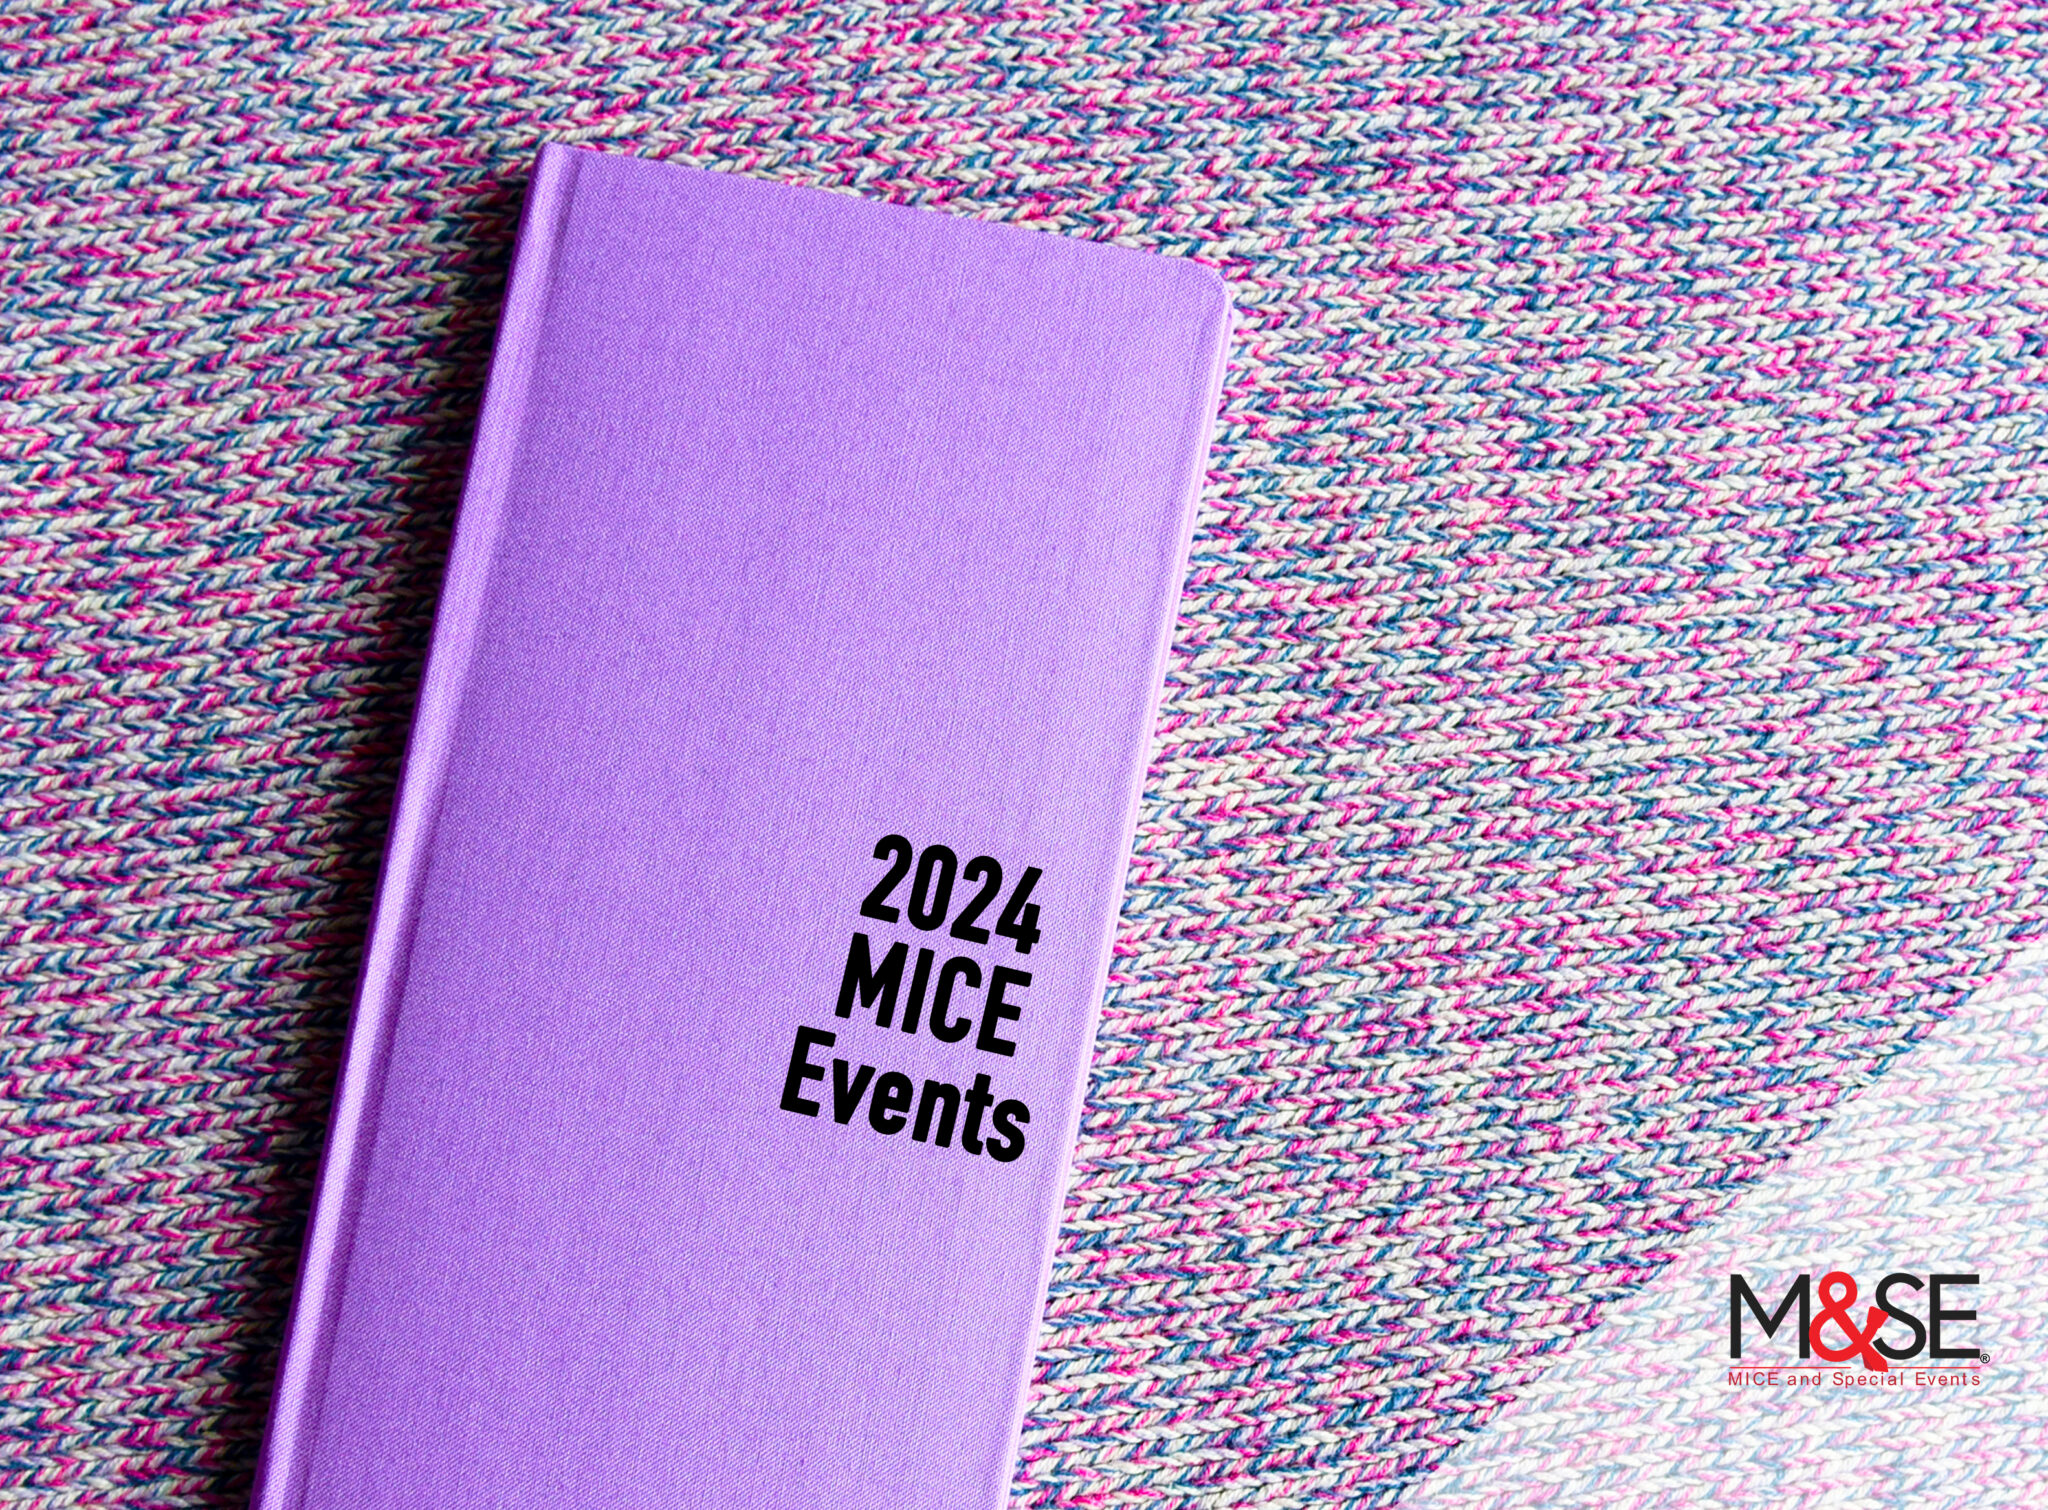 MICE Events 2024 2048x1510 